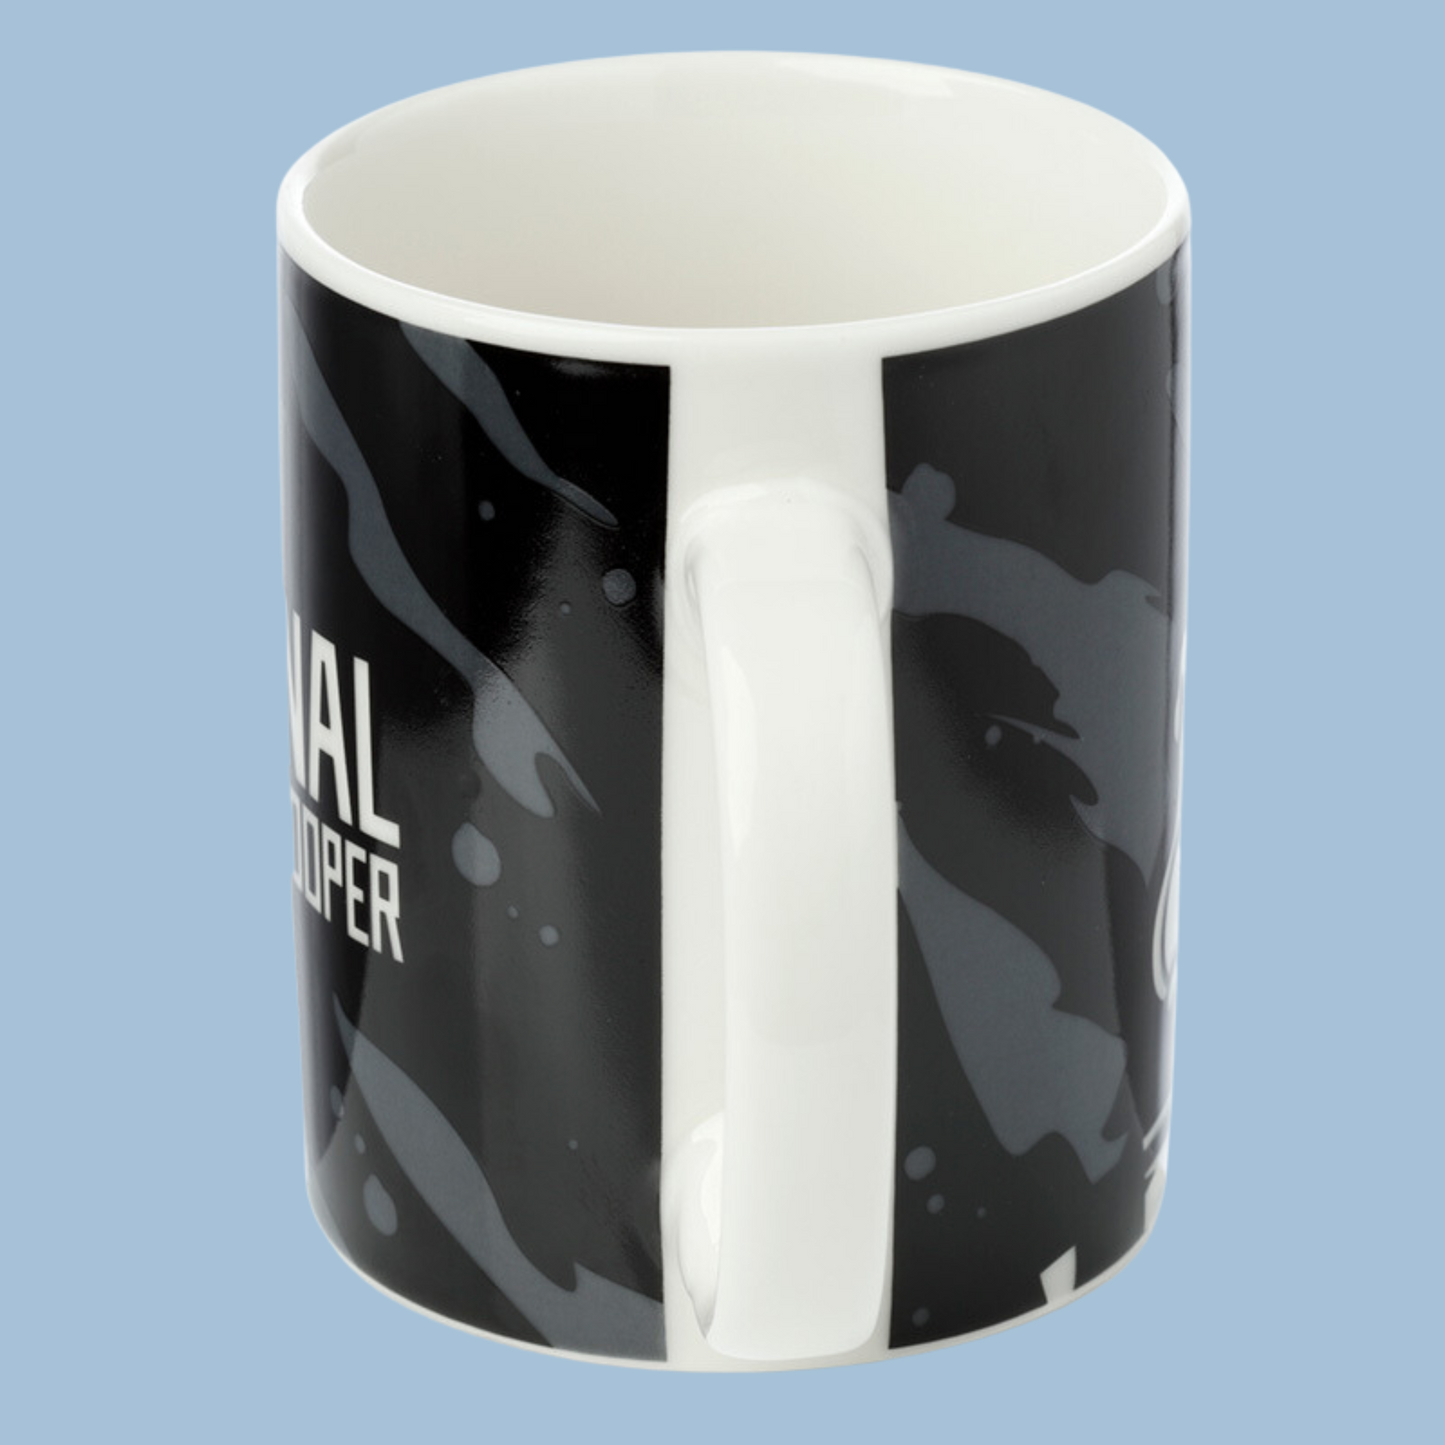 Original Stormtrooper Black Ceramic Mug